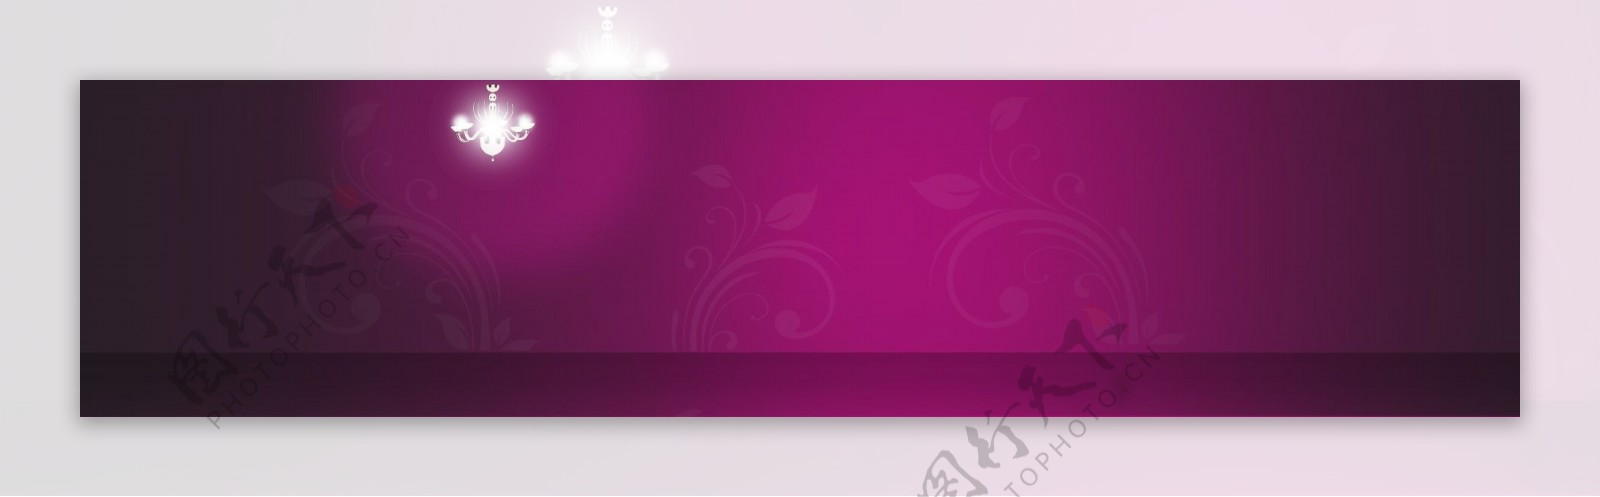 紫色花纹珠宝奢华背景banner